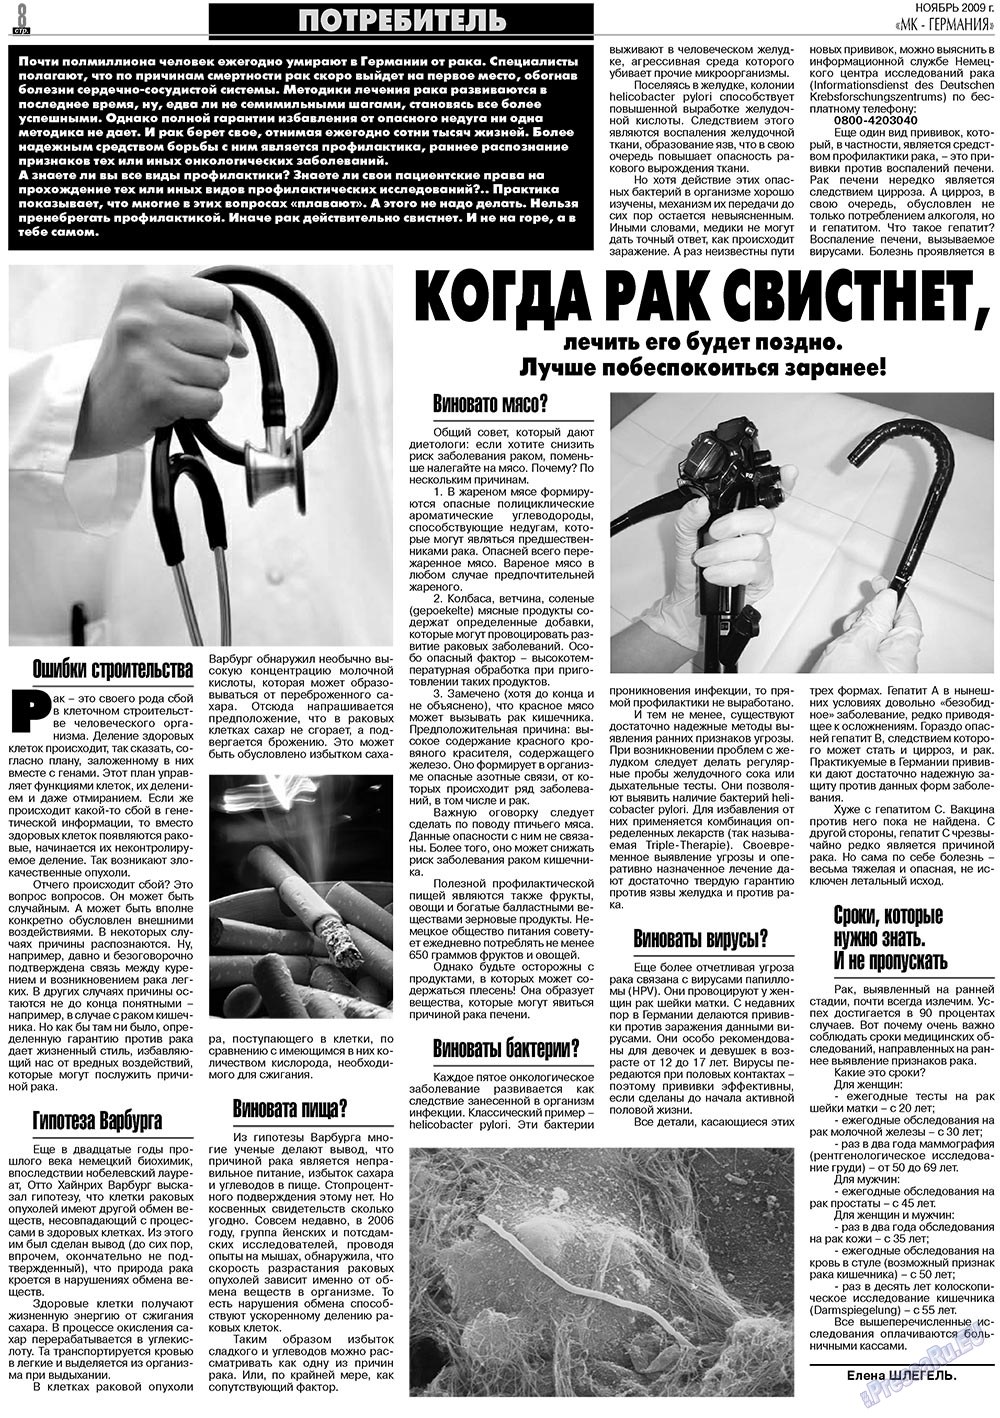 МК-Германия планета мнений (газета). 2009 год, номер 11, стр. 8